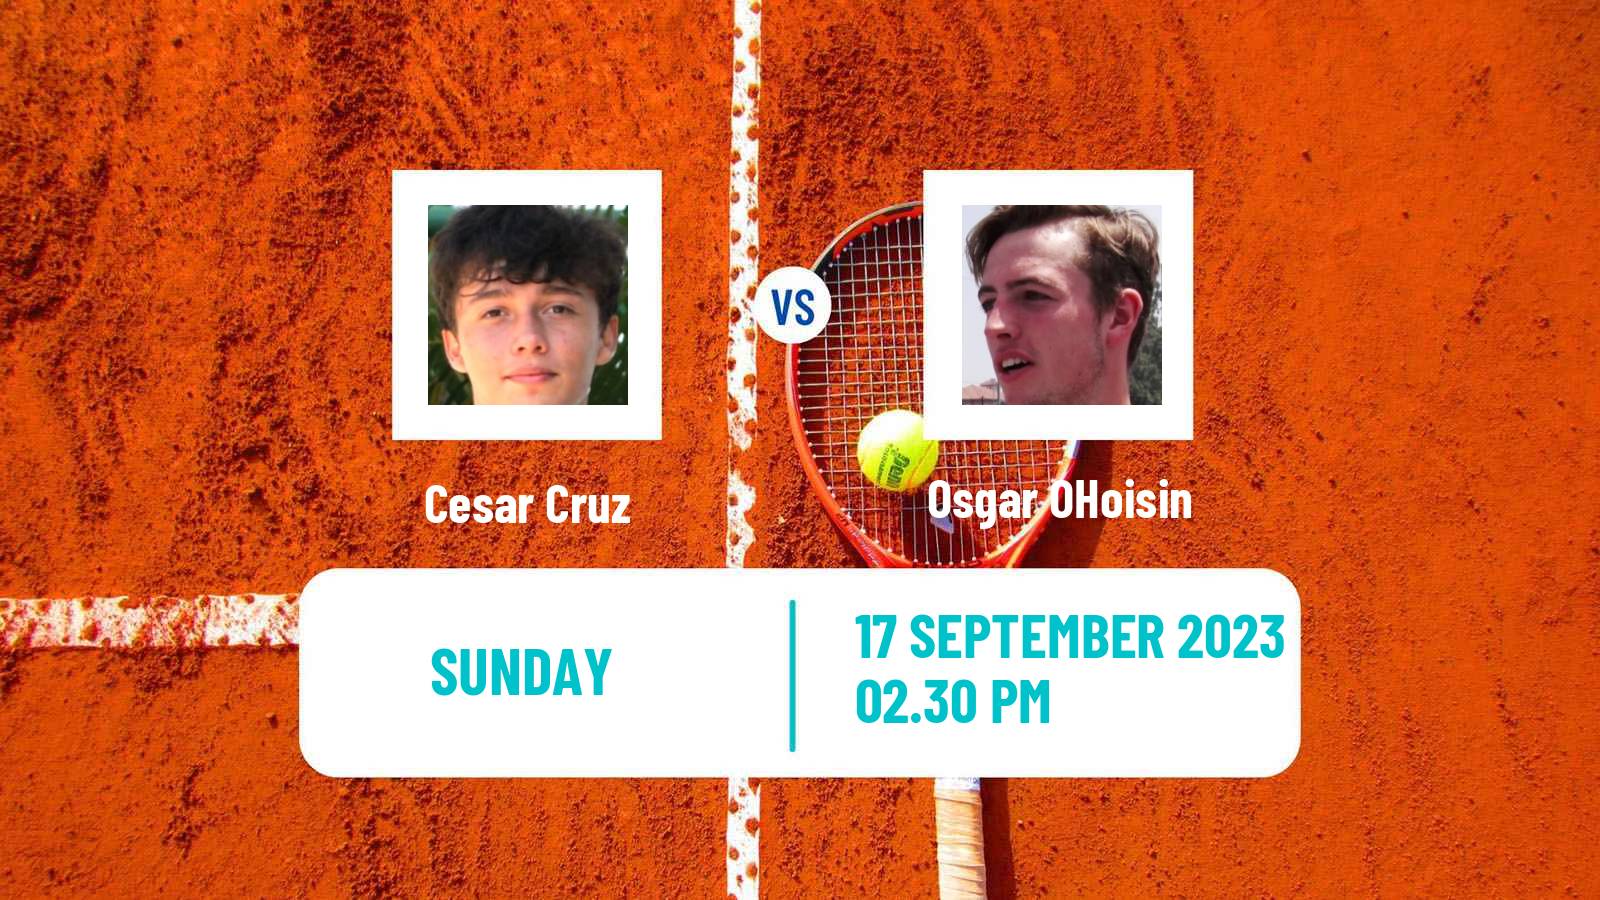 Tennis Davis Cup World Group II Cesar Cruz - Osgar OHoisin